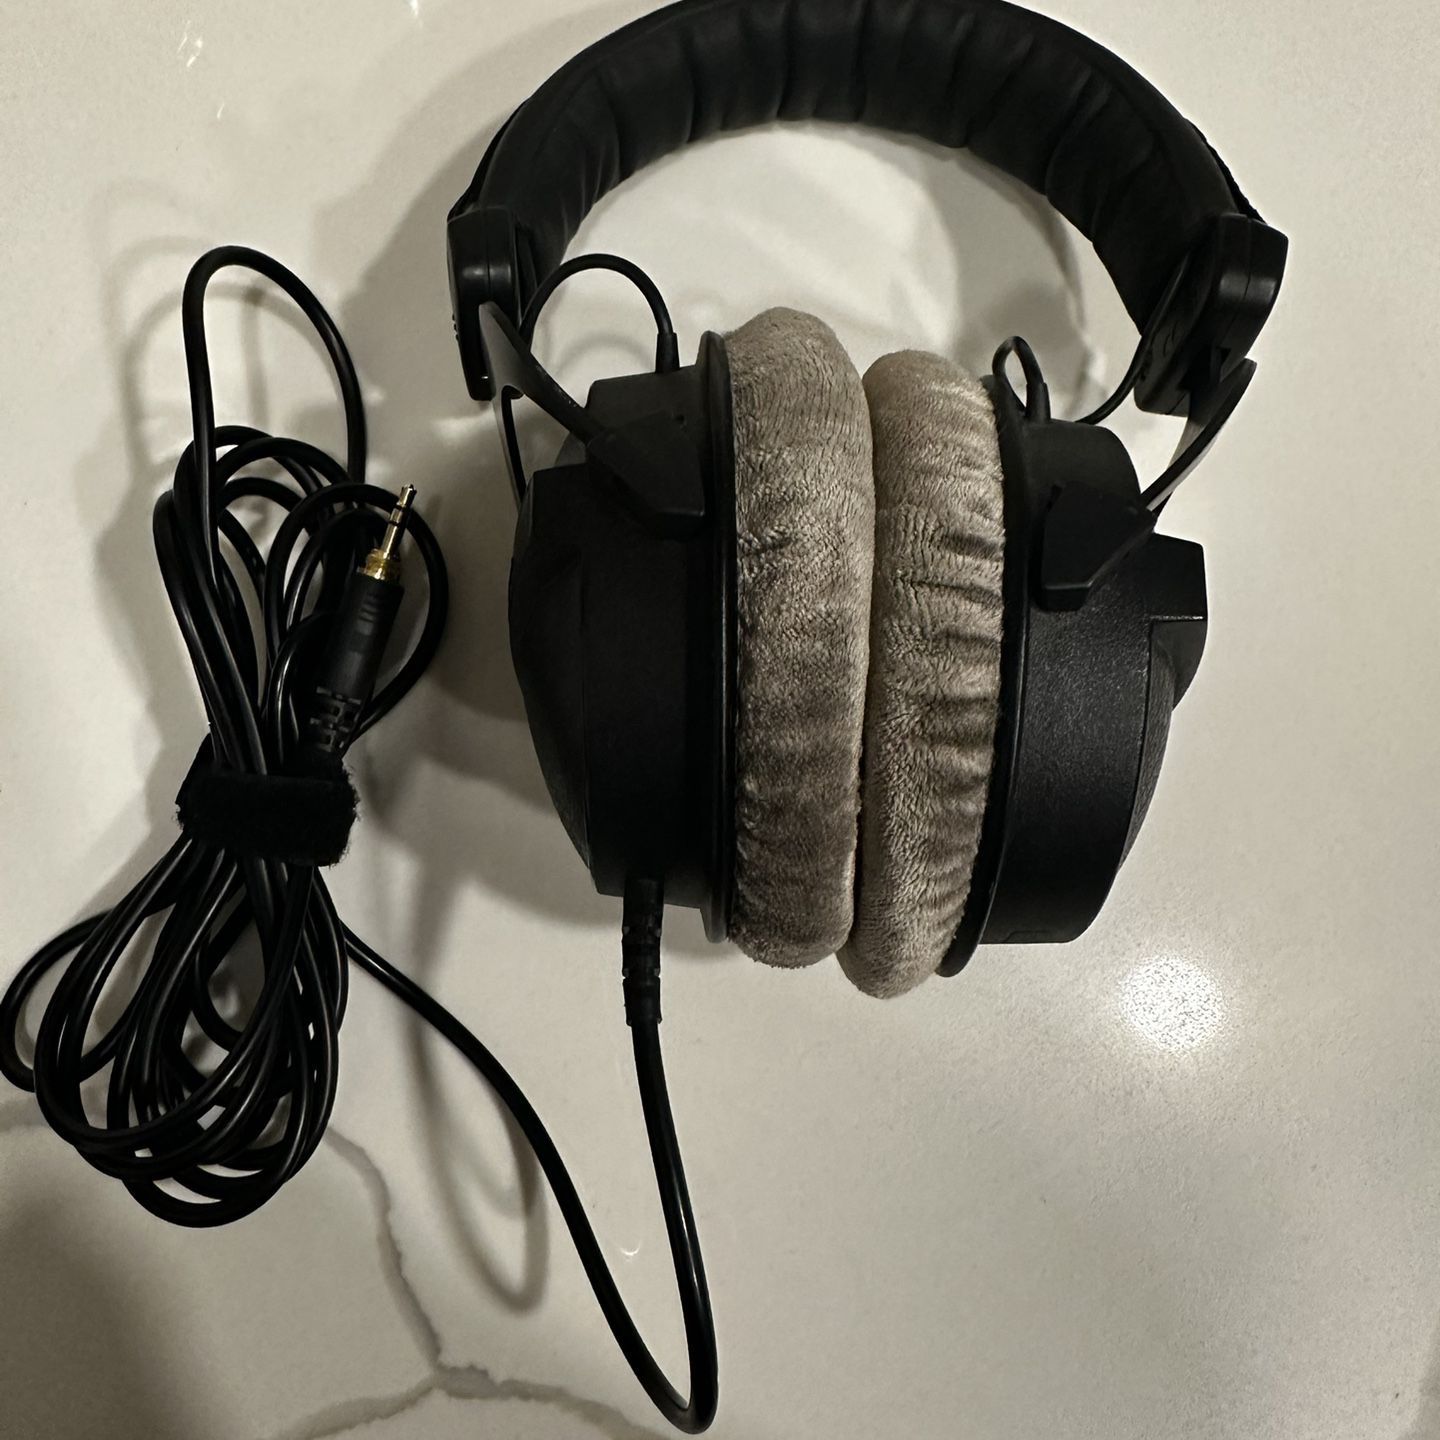 Beyerdynamic DT 770 PRO Studio Headphones